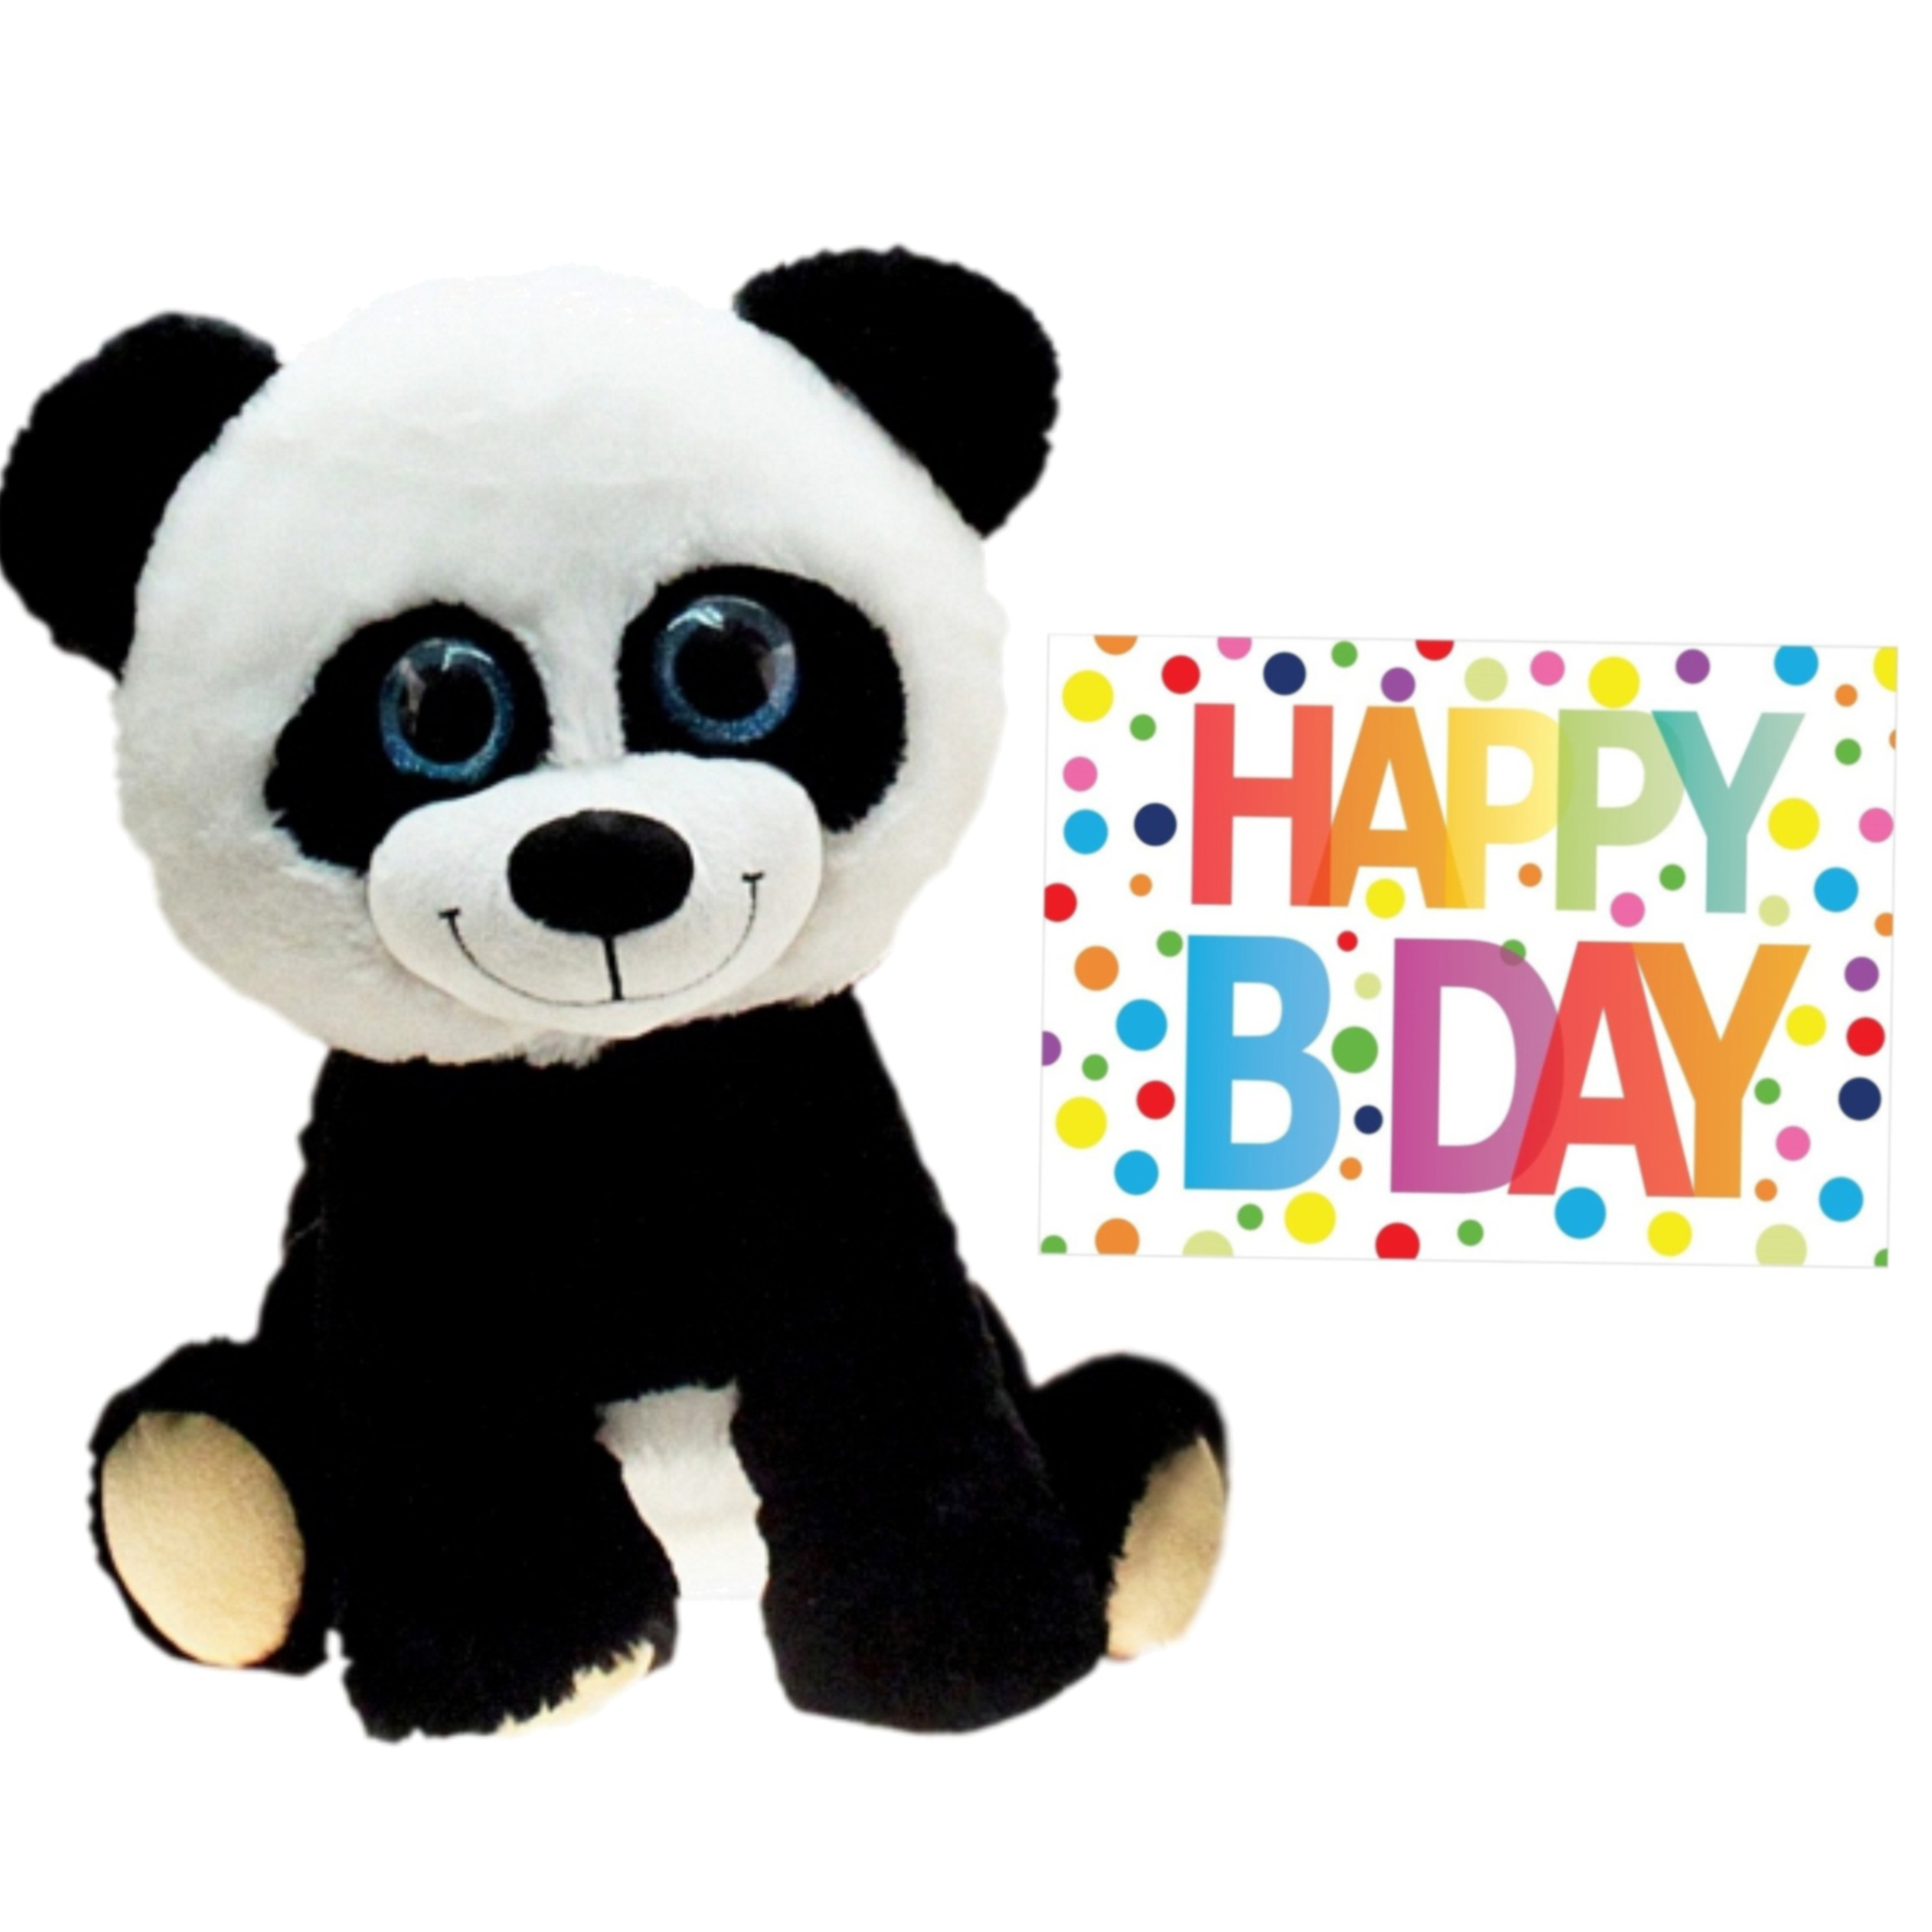 Pluche knuffel panda beer 40 cm met A5-size Happy Birthday wenskaart